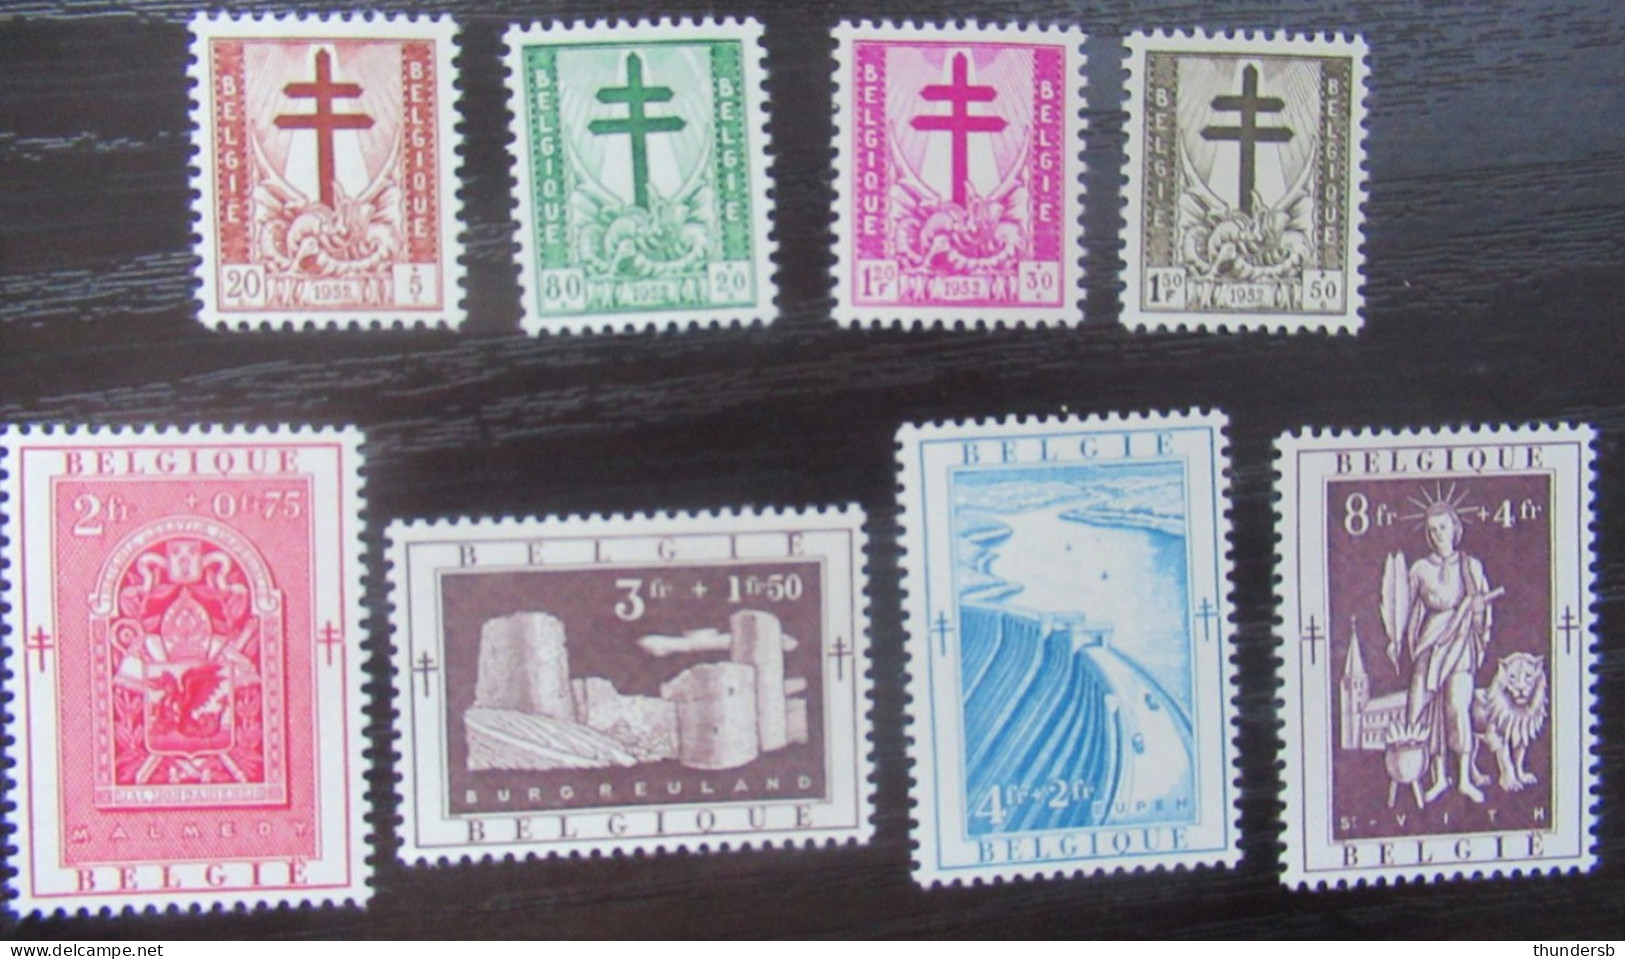 900/07 'Antiteringzegels' - Ongebruikt * - Côte: 46 Euro - Unused Stamps